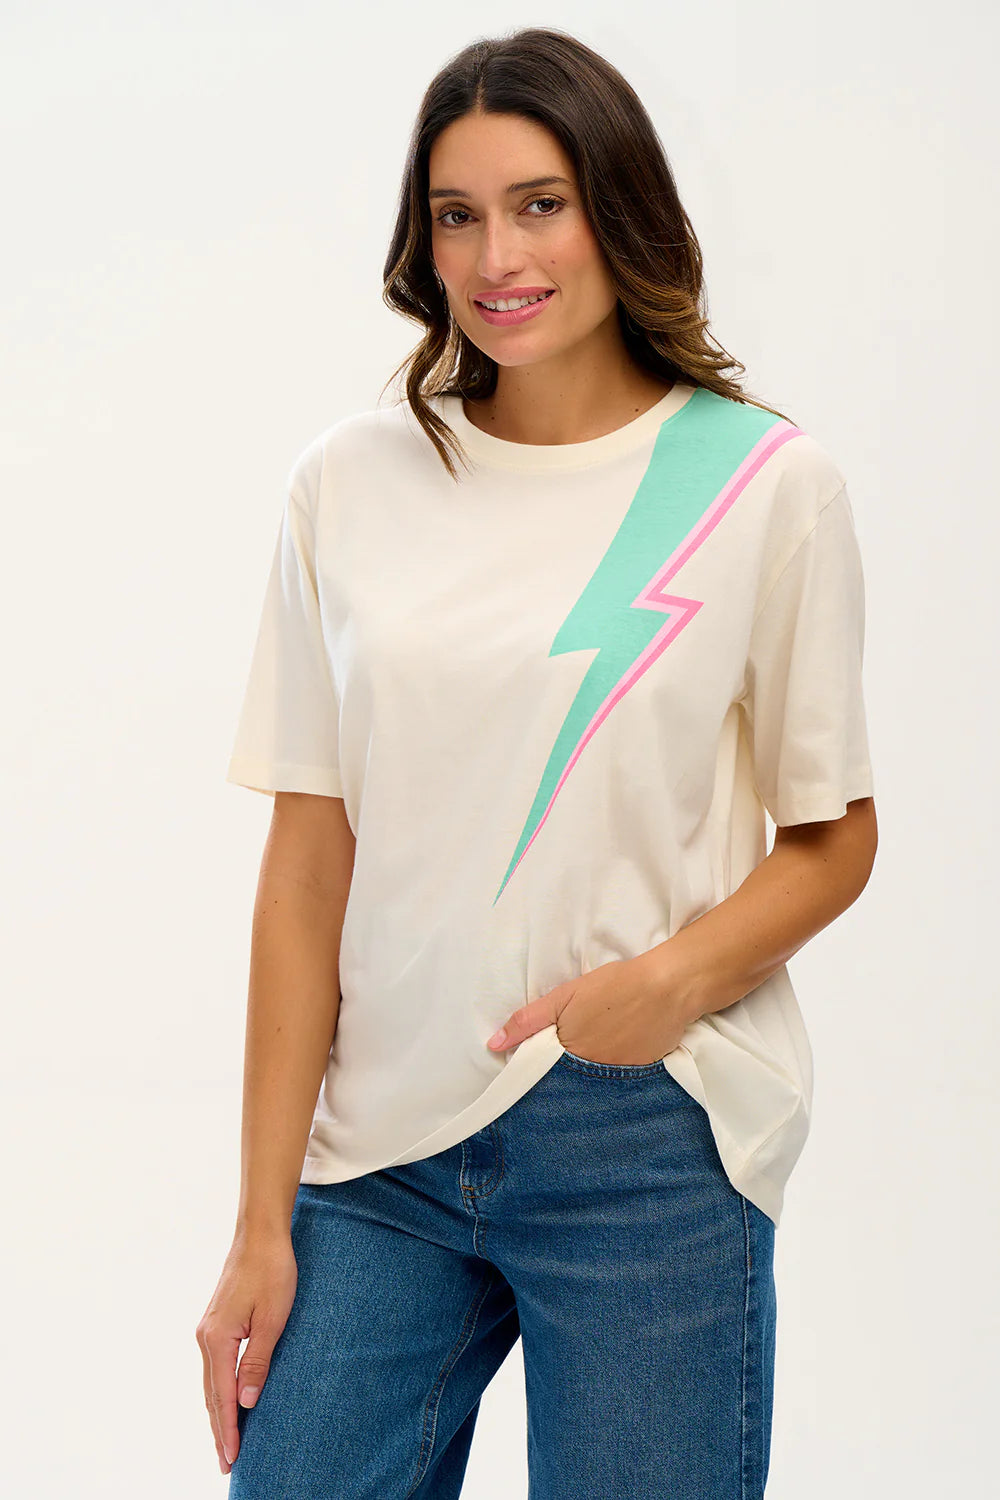 Kinsley Relaxed T-shirt  (Off-White, Lightning Flash)